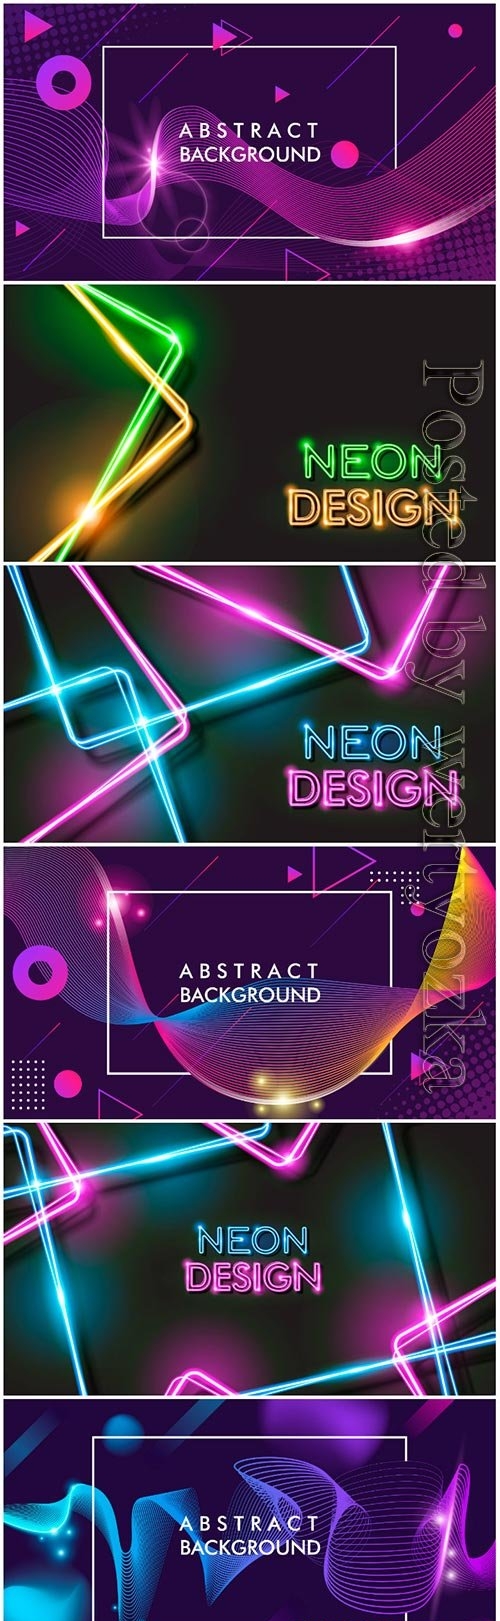 Abstract glowing neon black background design premium vector